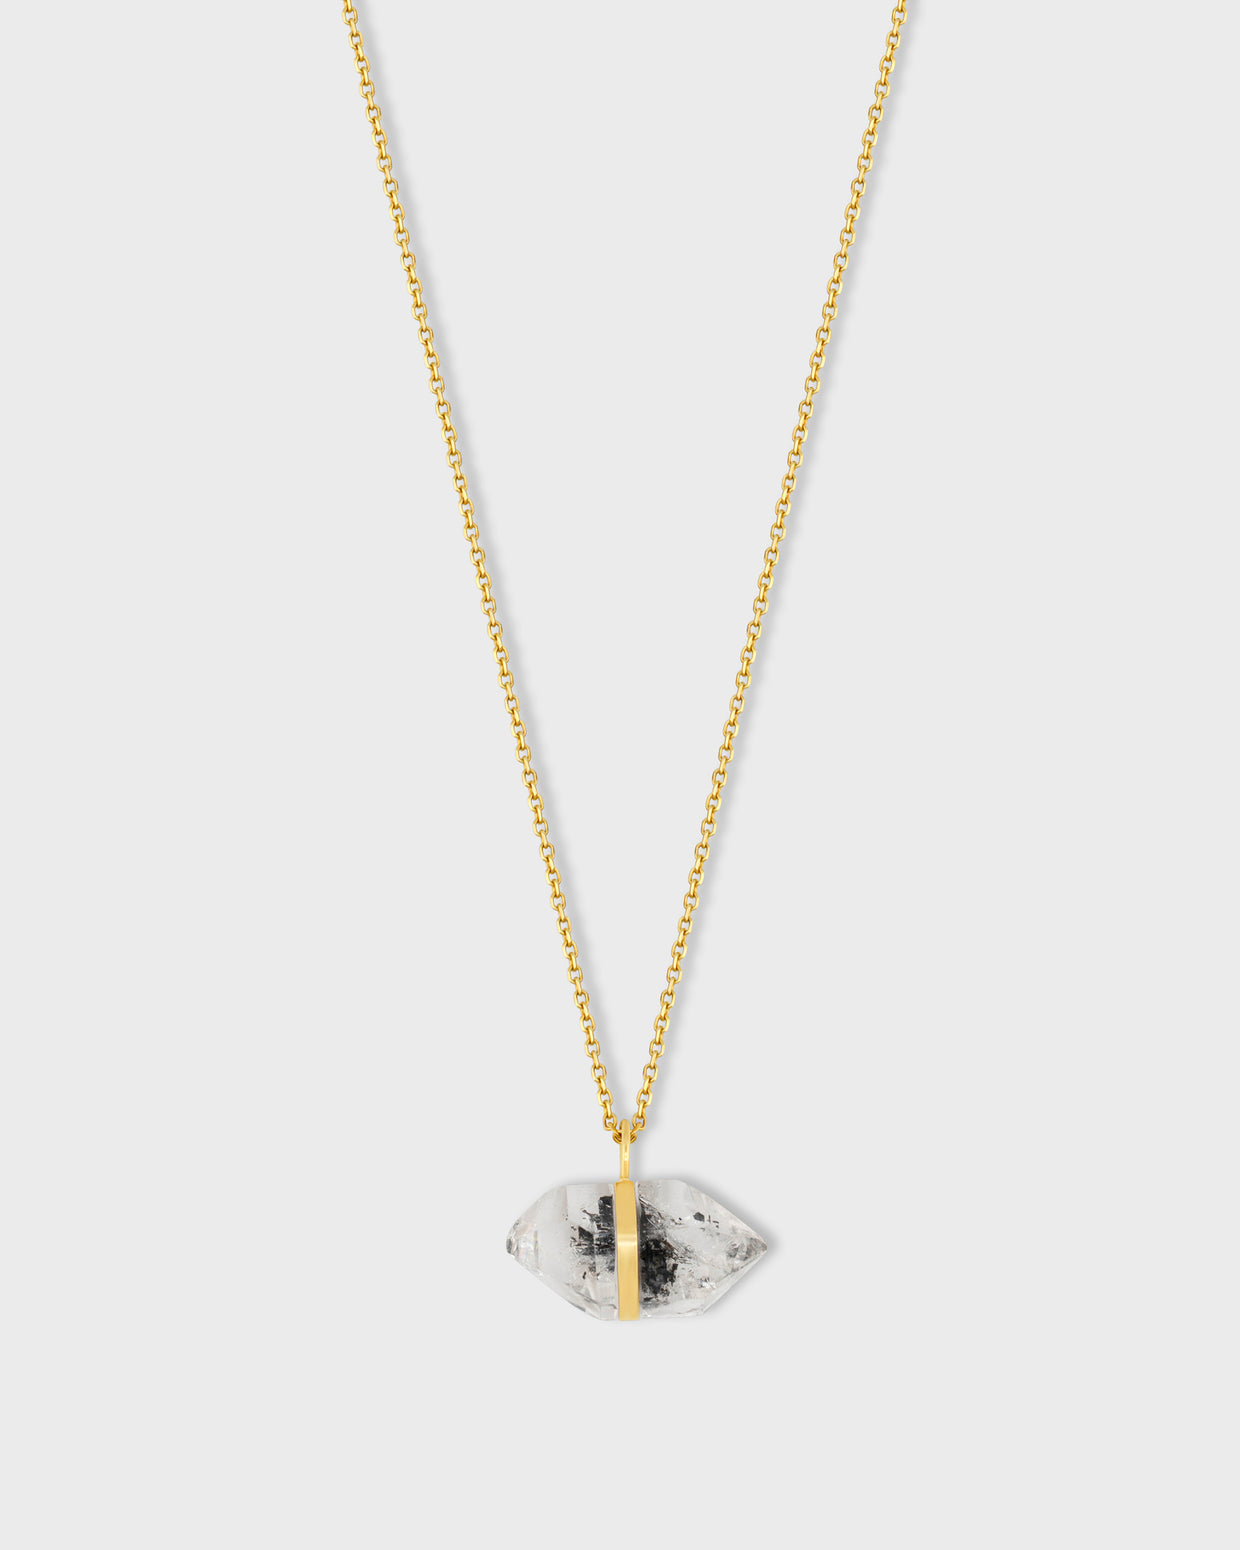 Birthstone April Herkimer Diamond Necklace